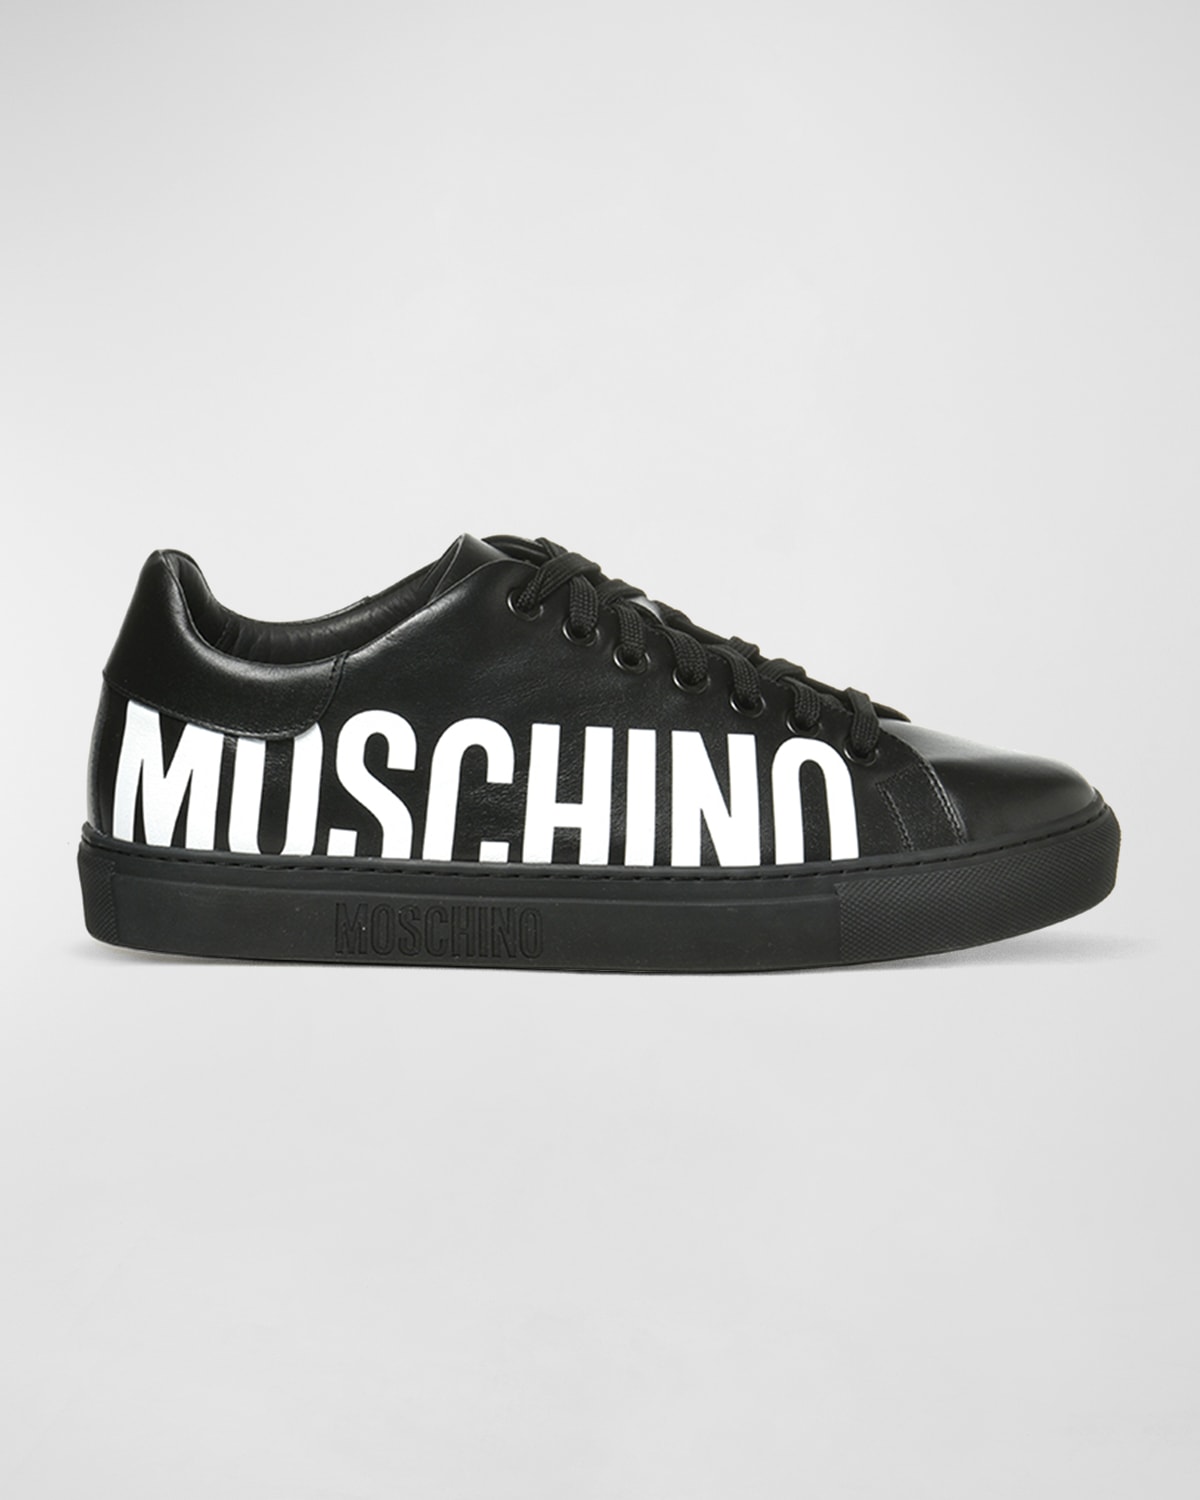 Moschino Men's Two-Tone Logo Low-Top Sneakers | Neiman Marcus